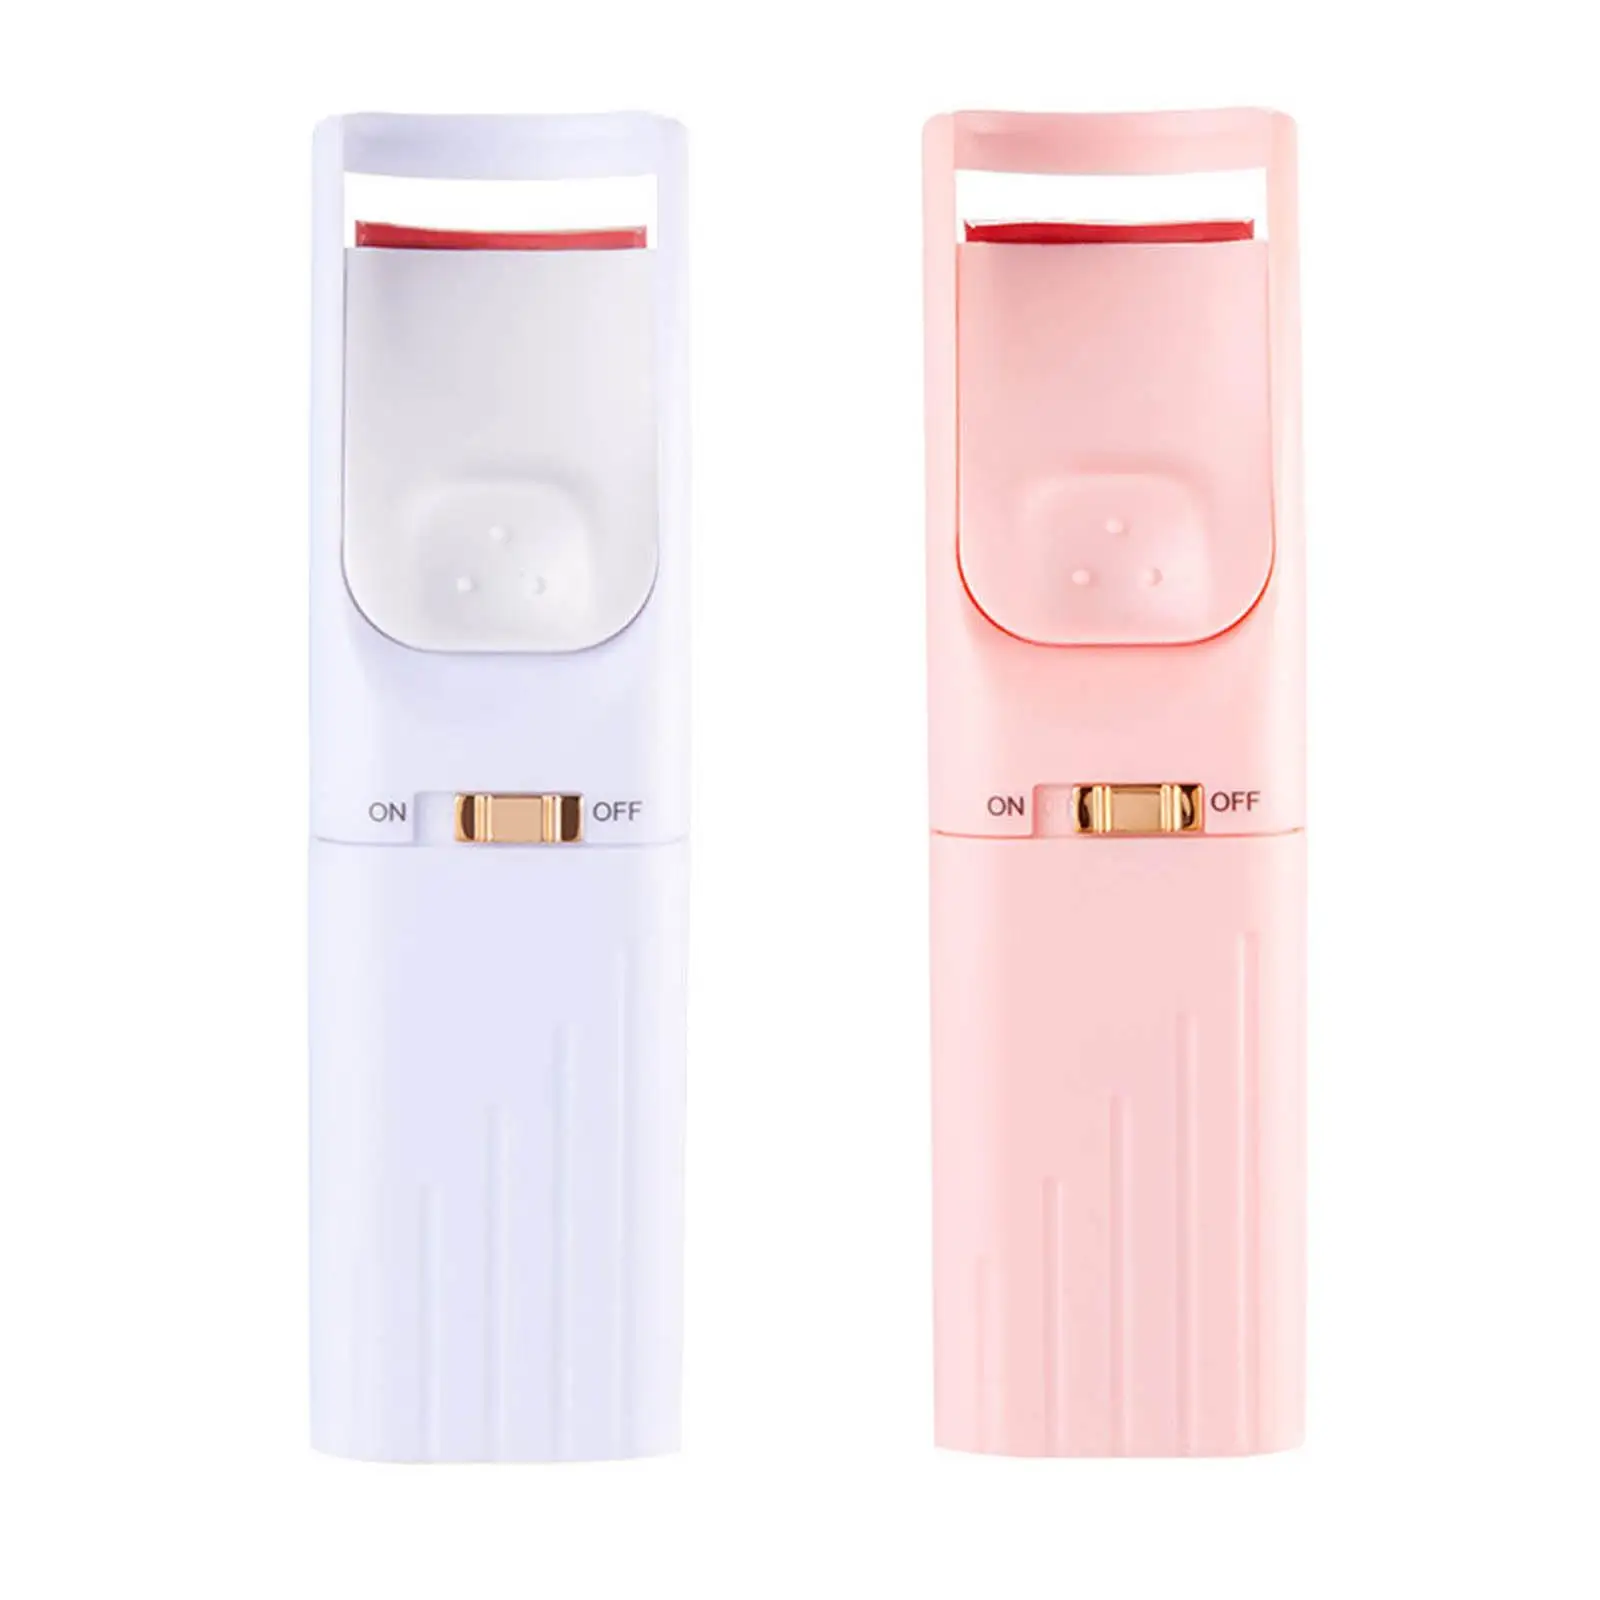 Electric Eyelash Curler for Women USB Charging, 40°C Intelligent Temperature Control